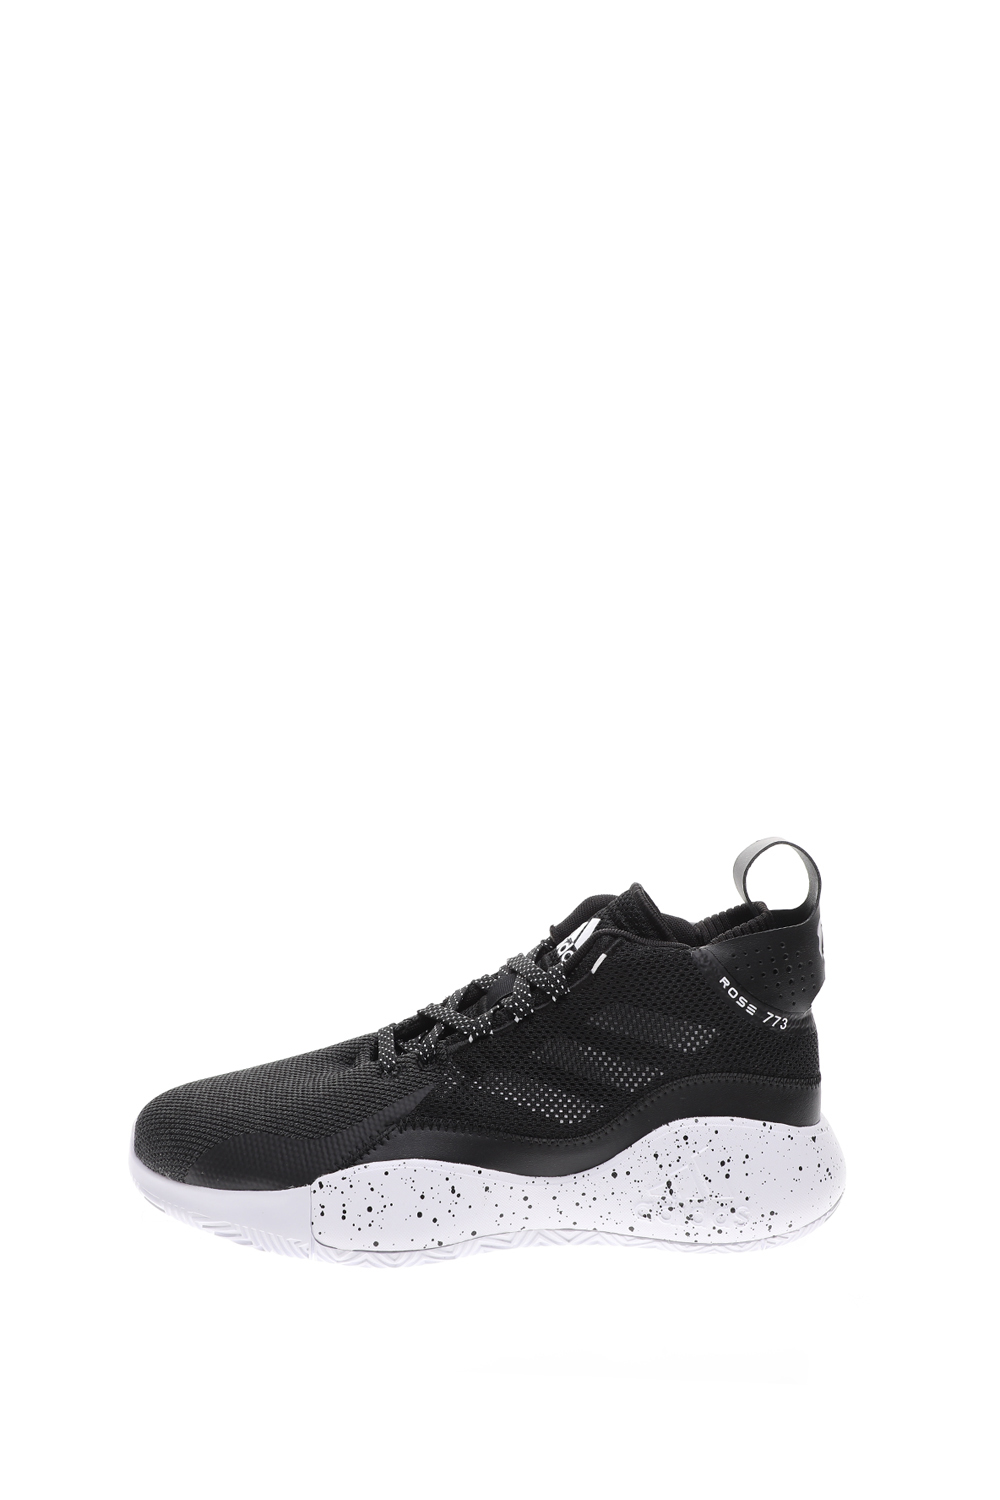 adidas Performance - Unisex παπούτσια basketball adidas Performance D Rose μαύρα λευκά Ανδρικά/Παπούτσια/Αθλητικά/Basketball